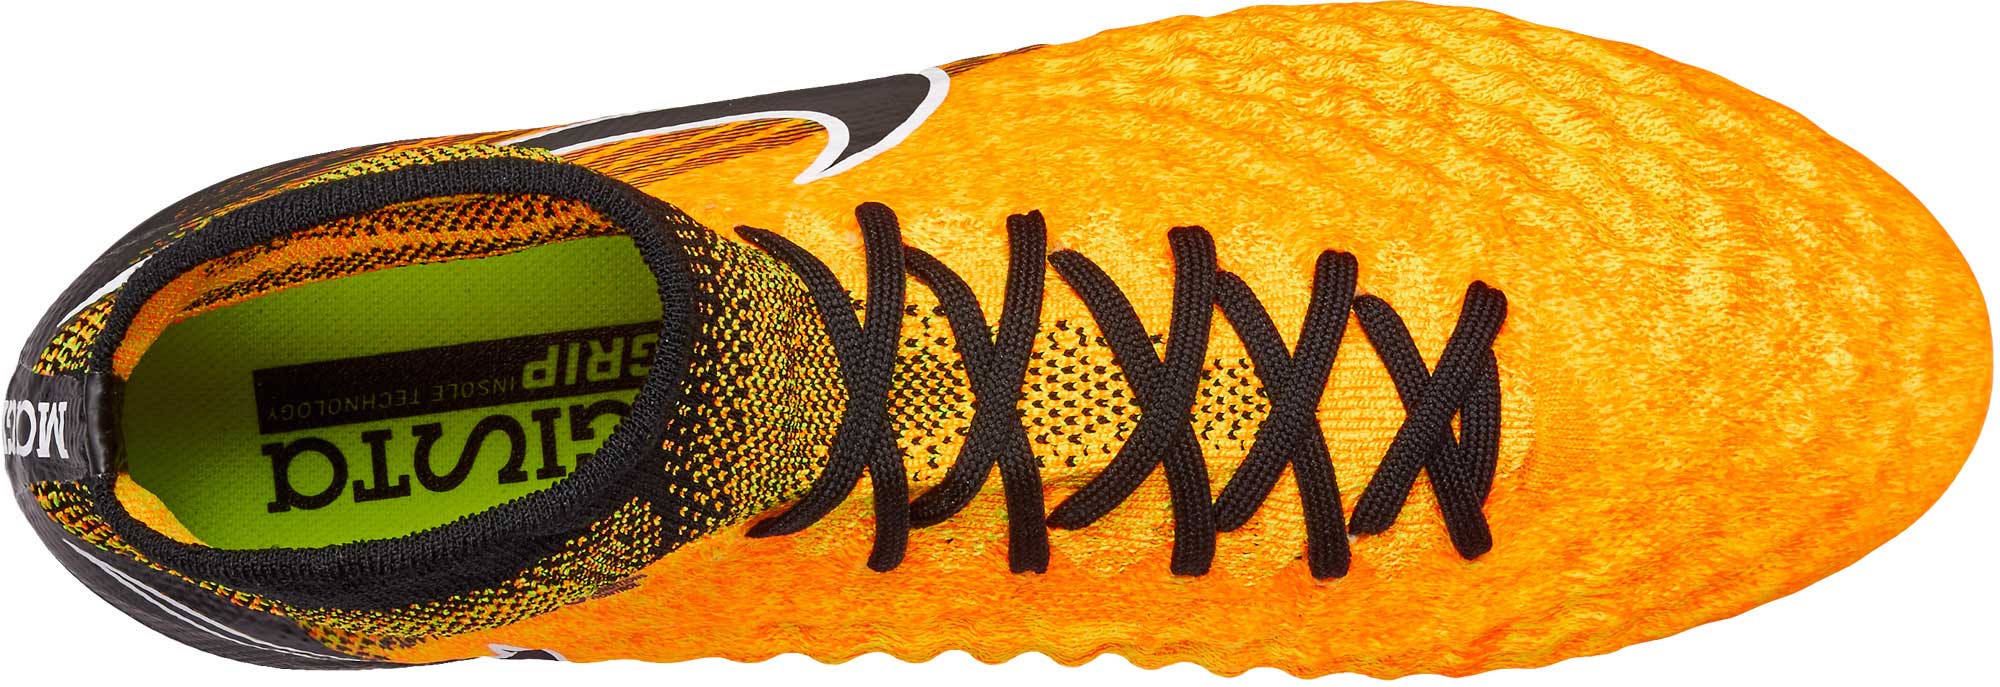 Nike Magista Soccer Cleats Orange Cleats